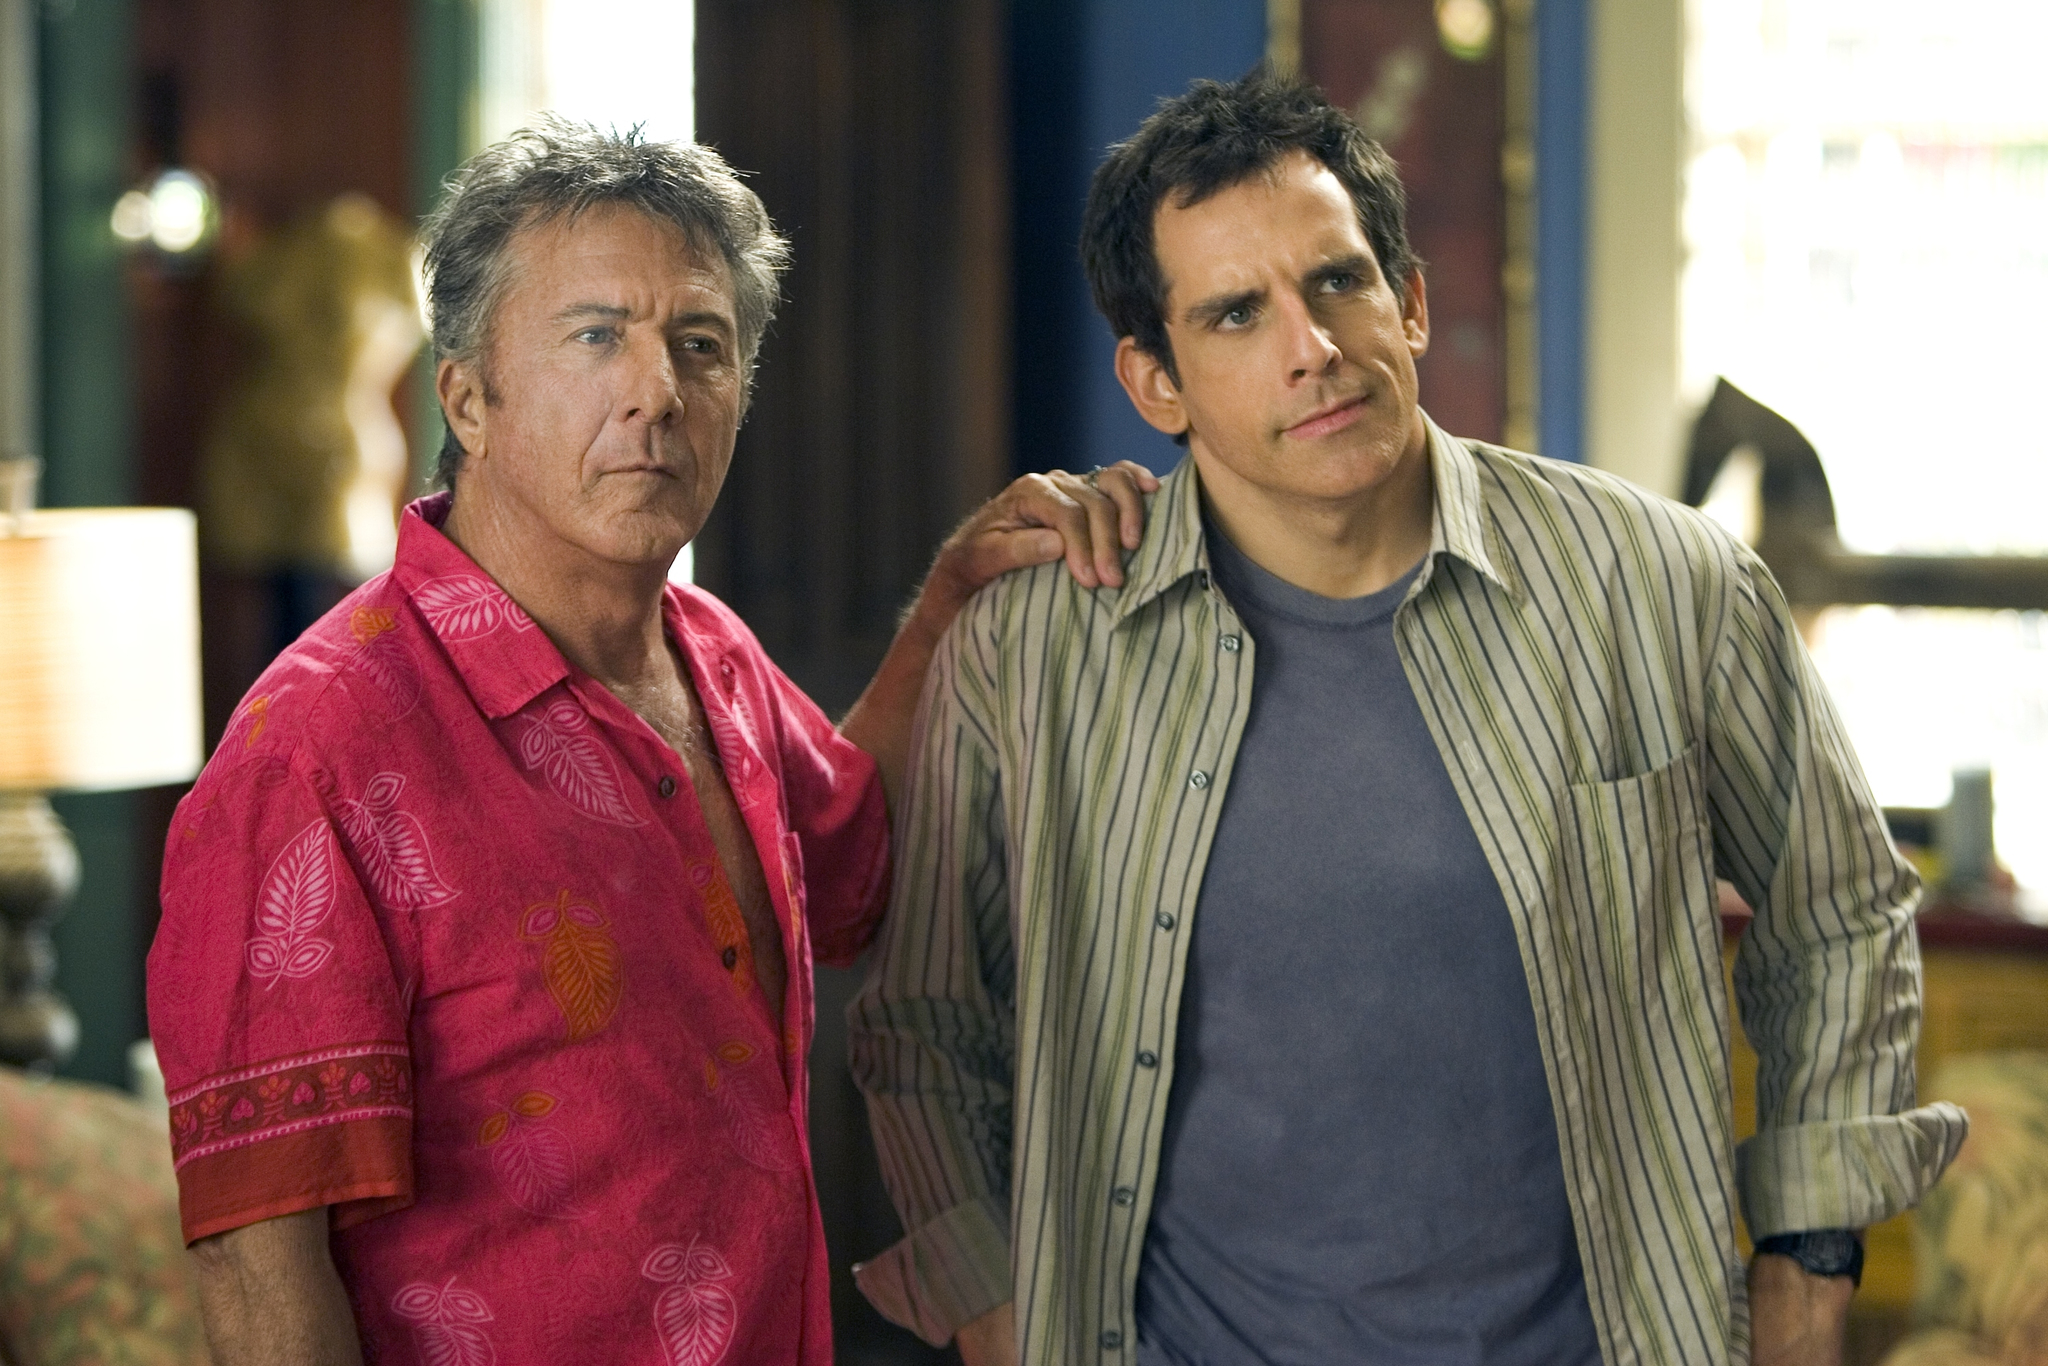 Still of Dustin Hoffman and Ben Stiller in Meet the Fockers (2004)